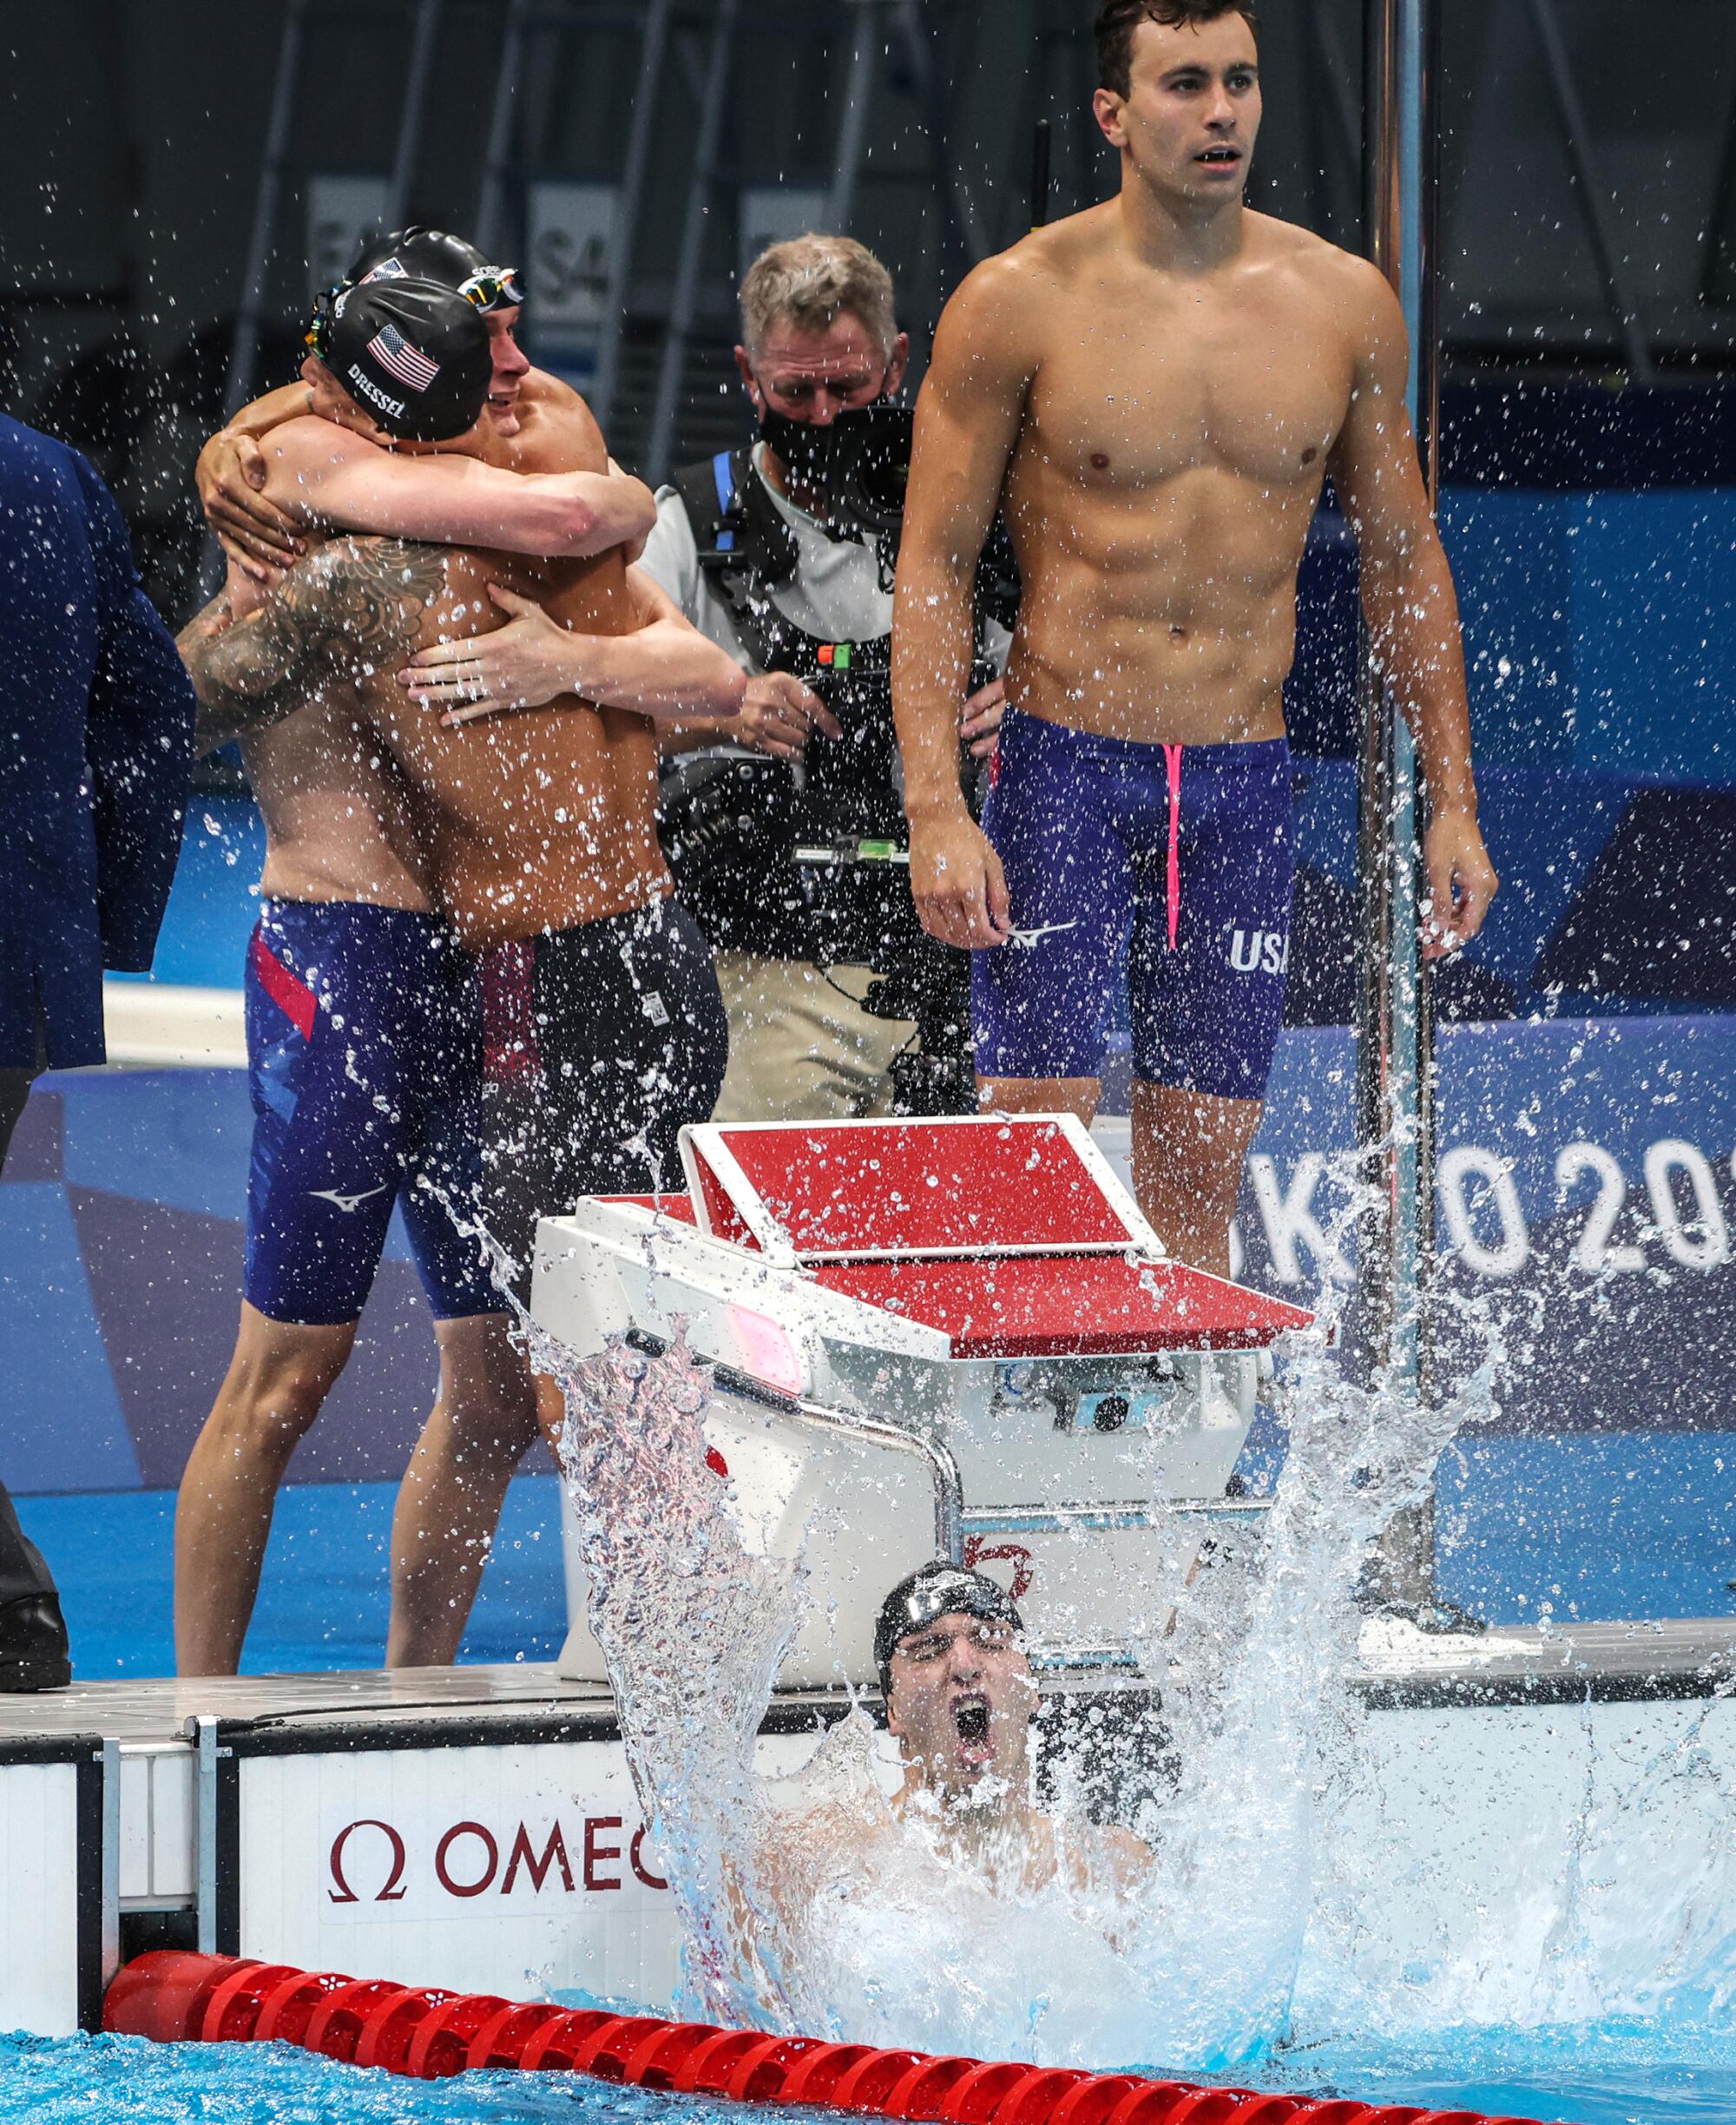 USA's Zach Apple splashes the water in jubilation.